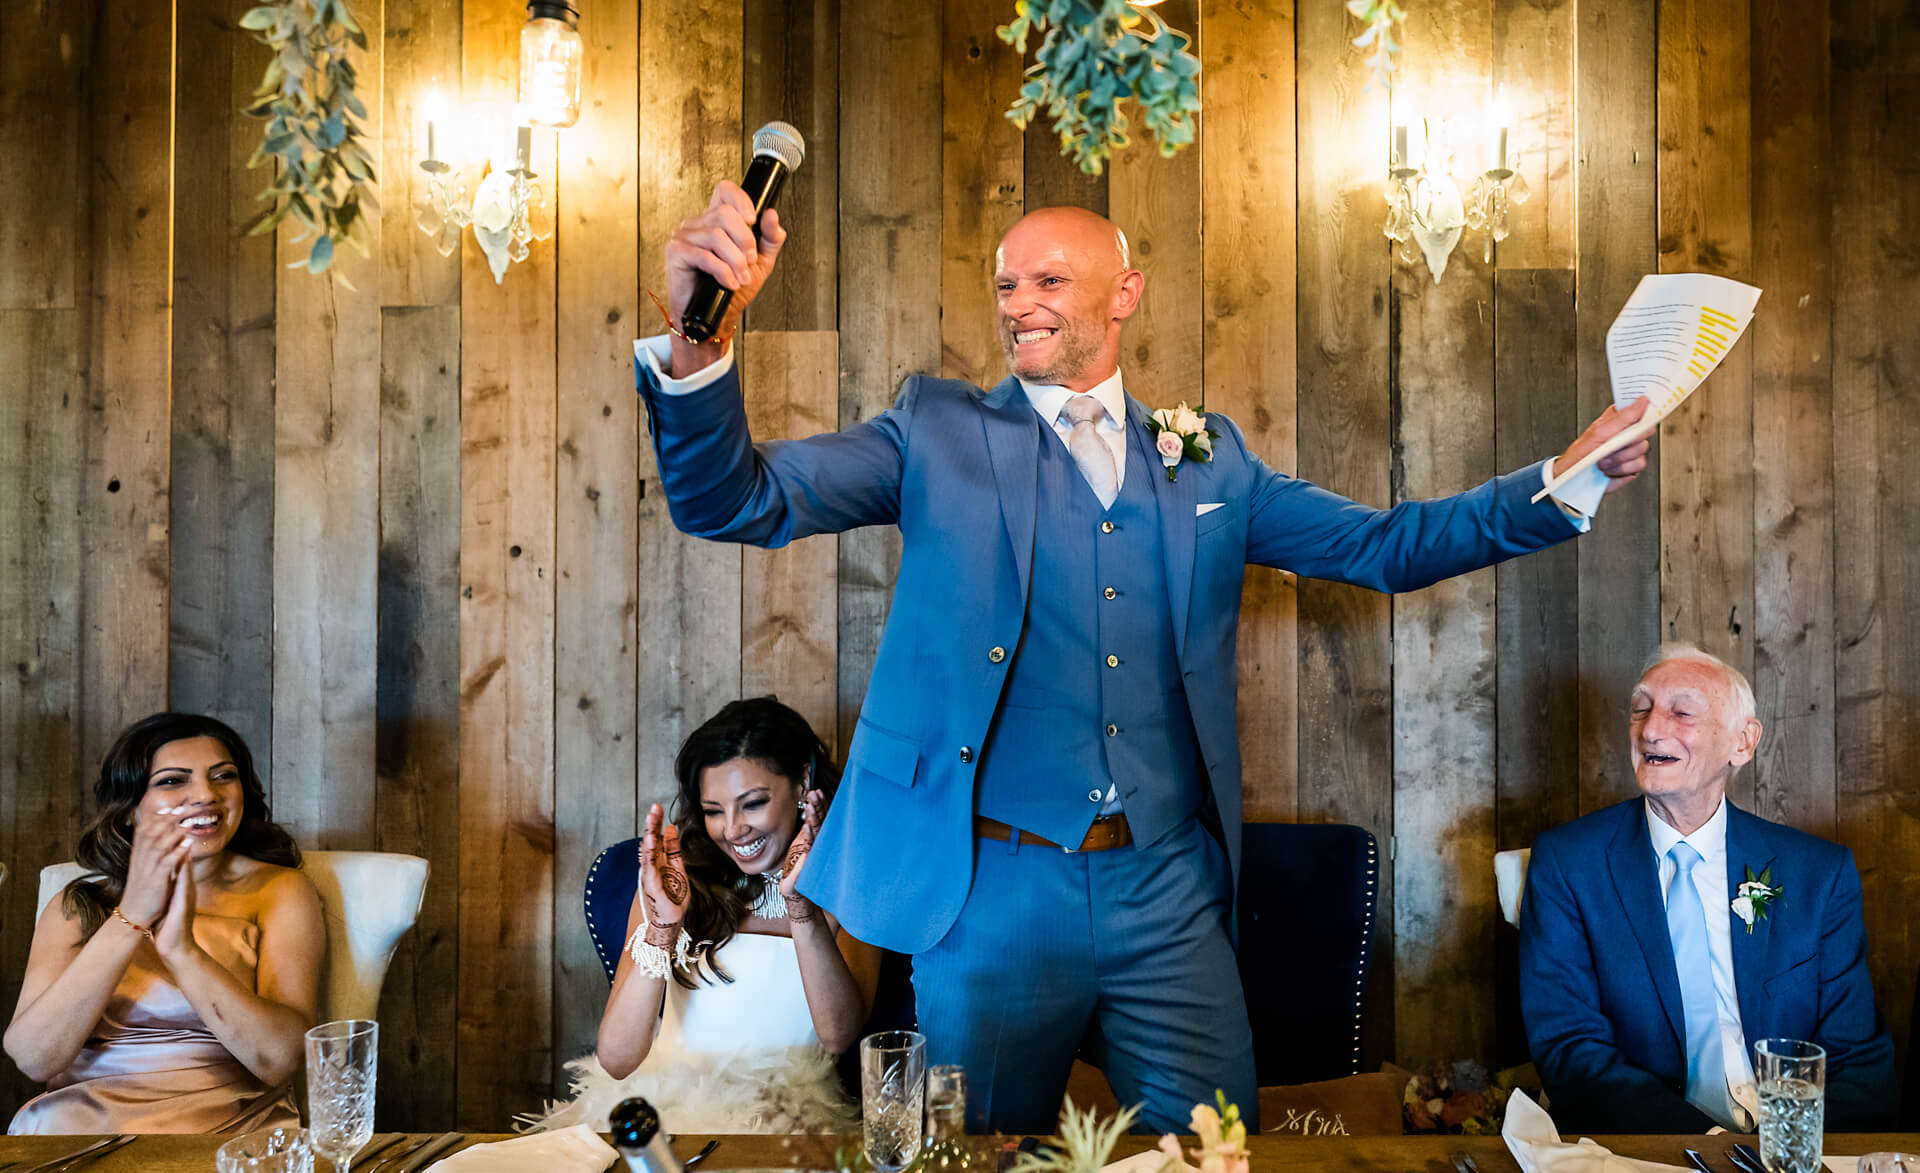 Groom giving toast at wedding reception.